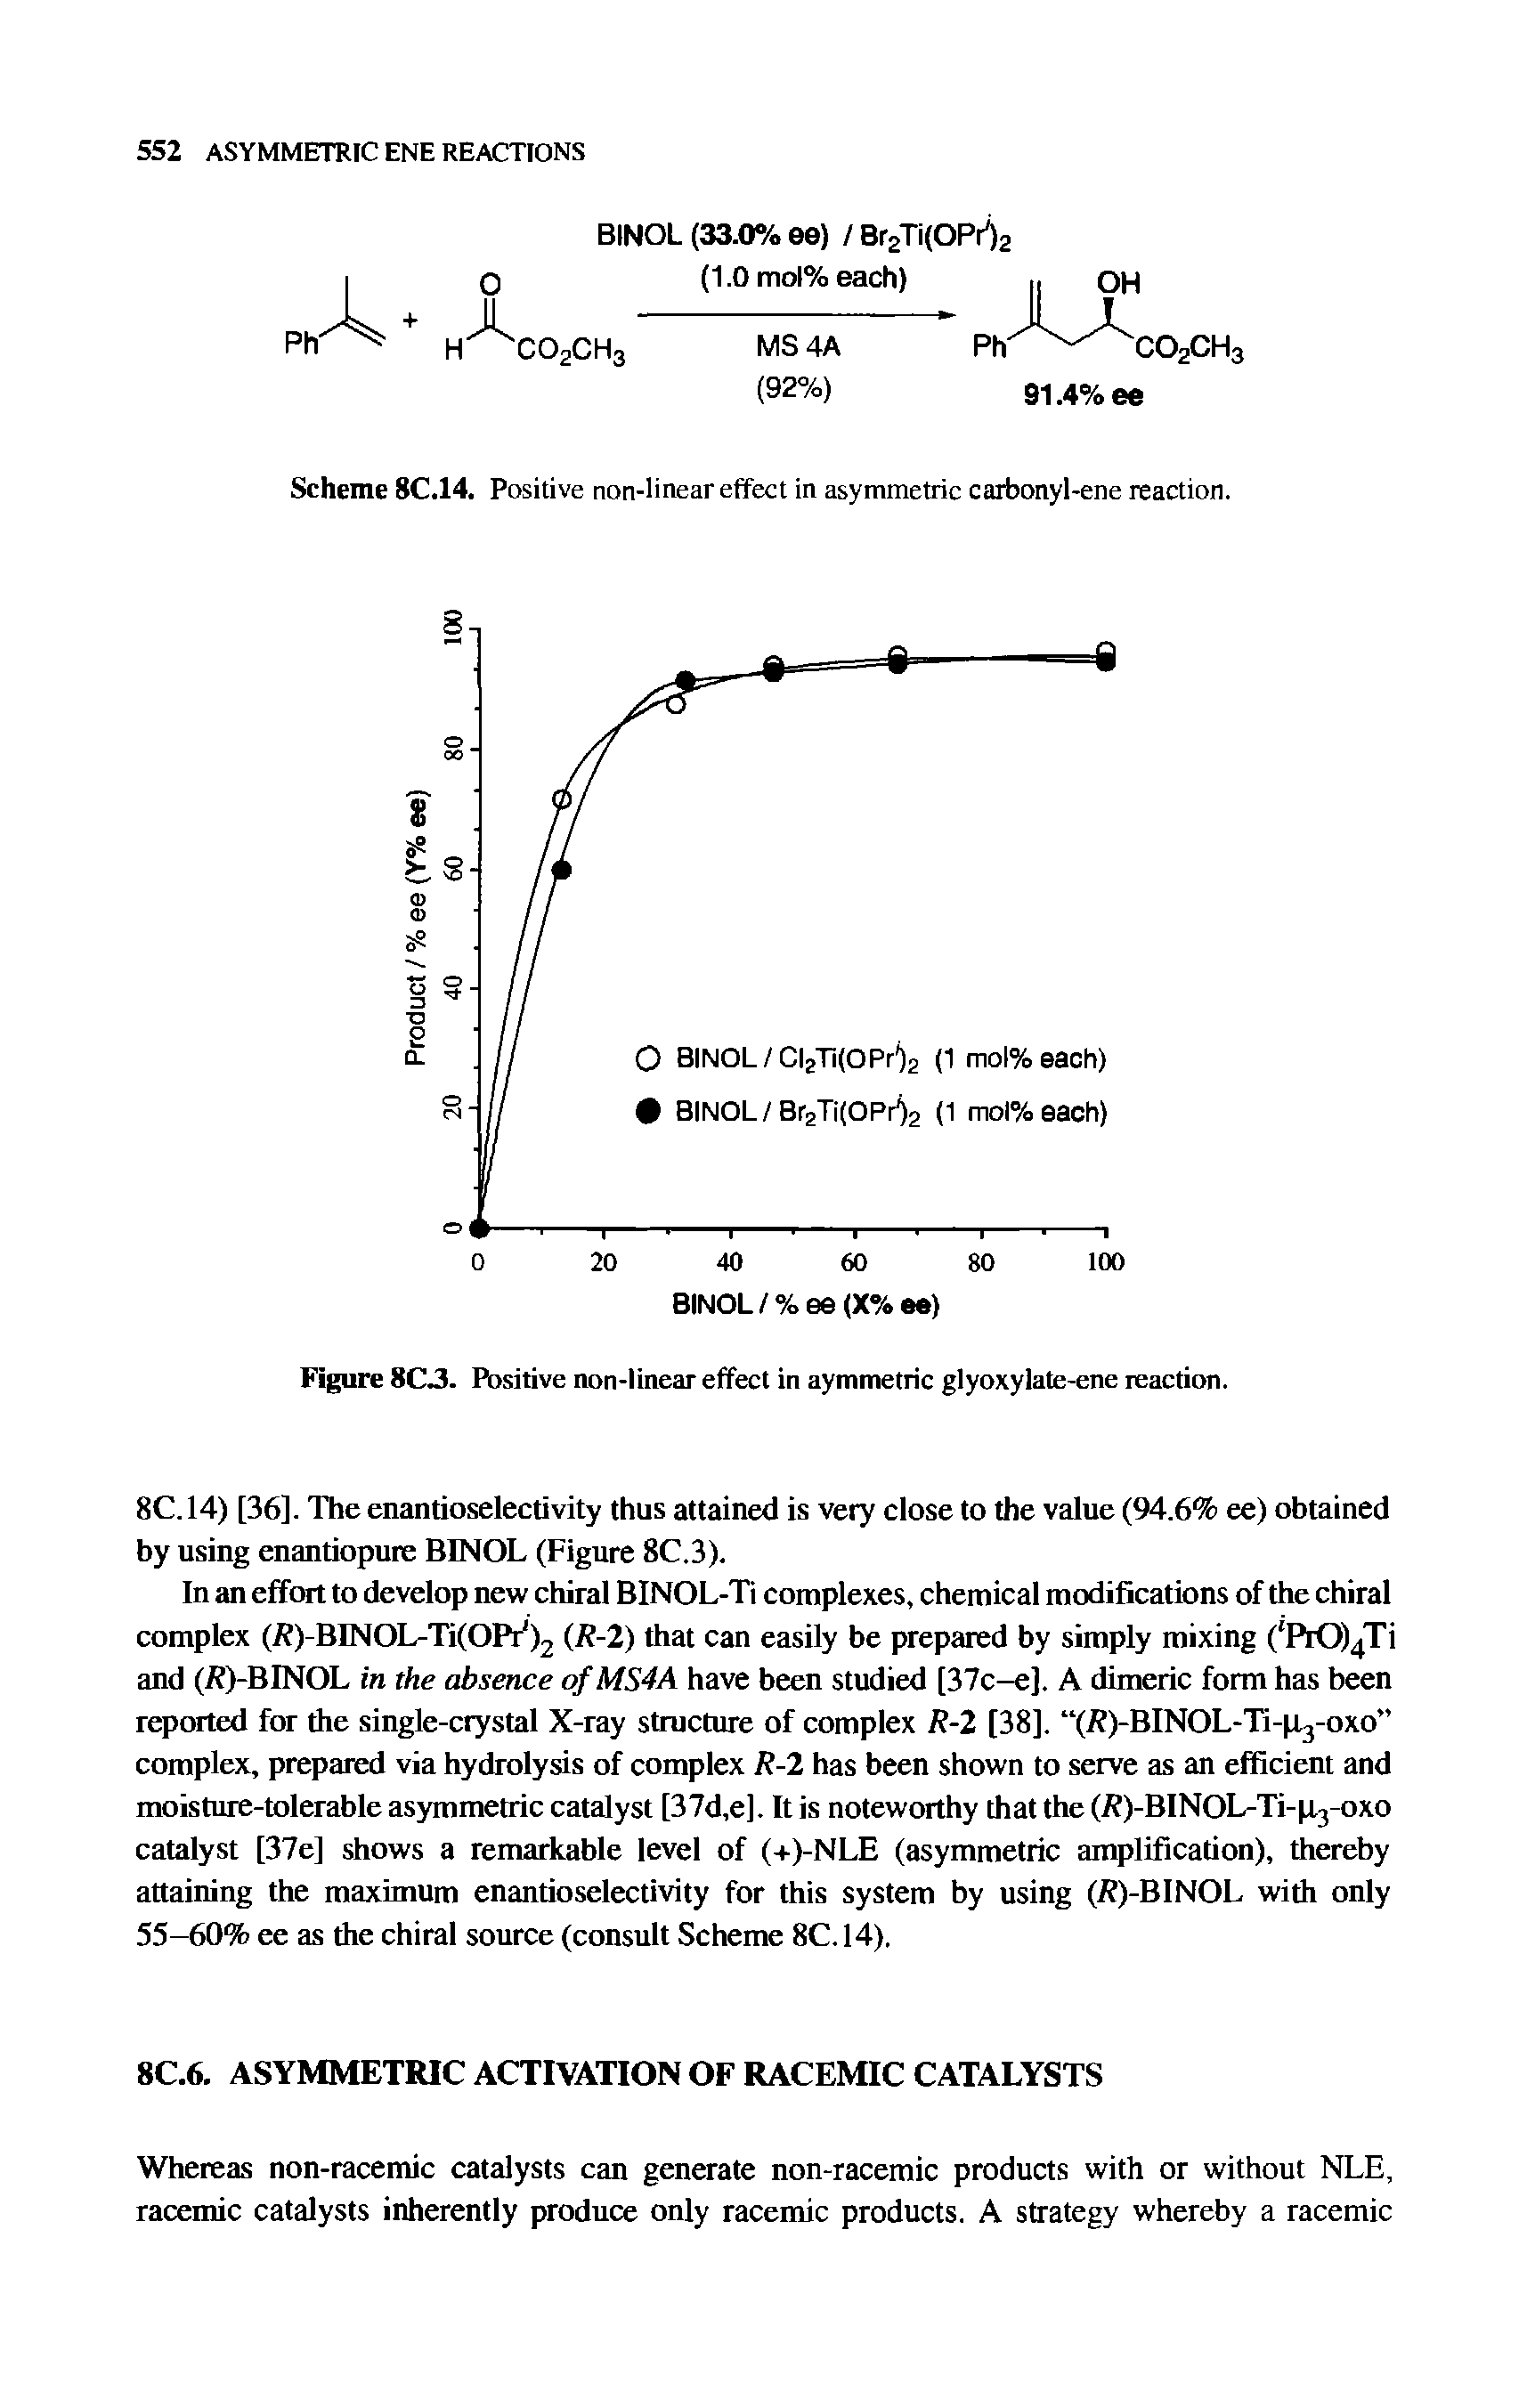 Figure 8C 3. Positive non-linear effect in aymmetric glyoxylate-ene reaction.